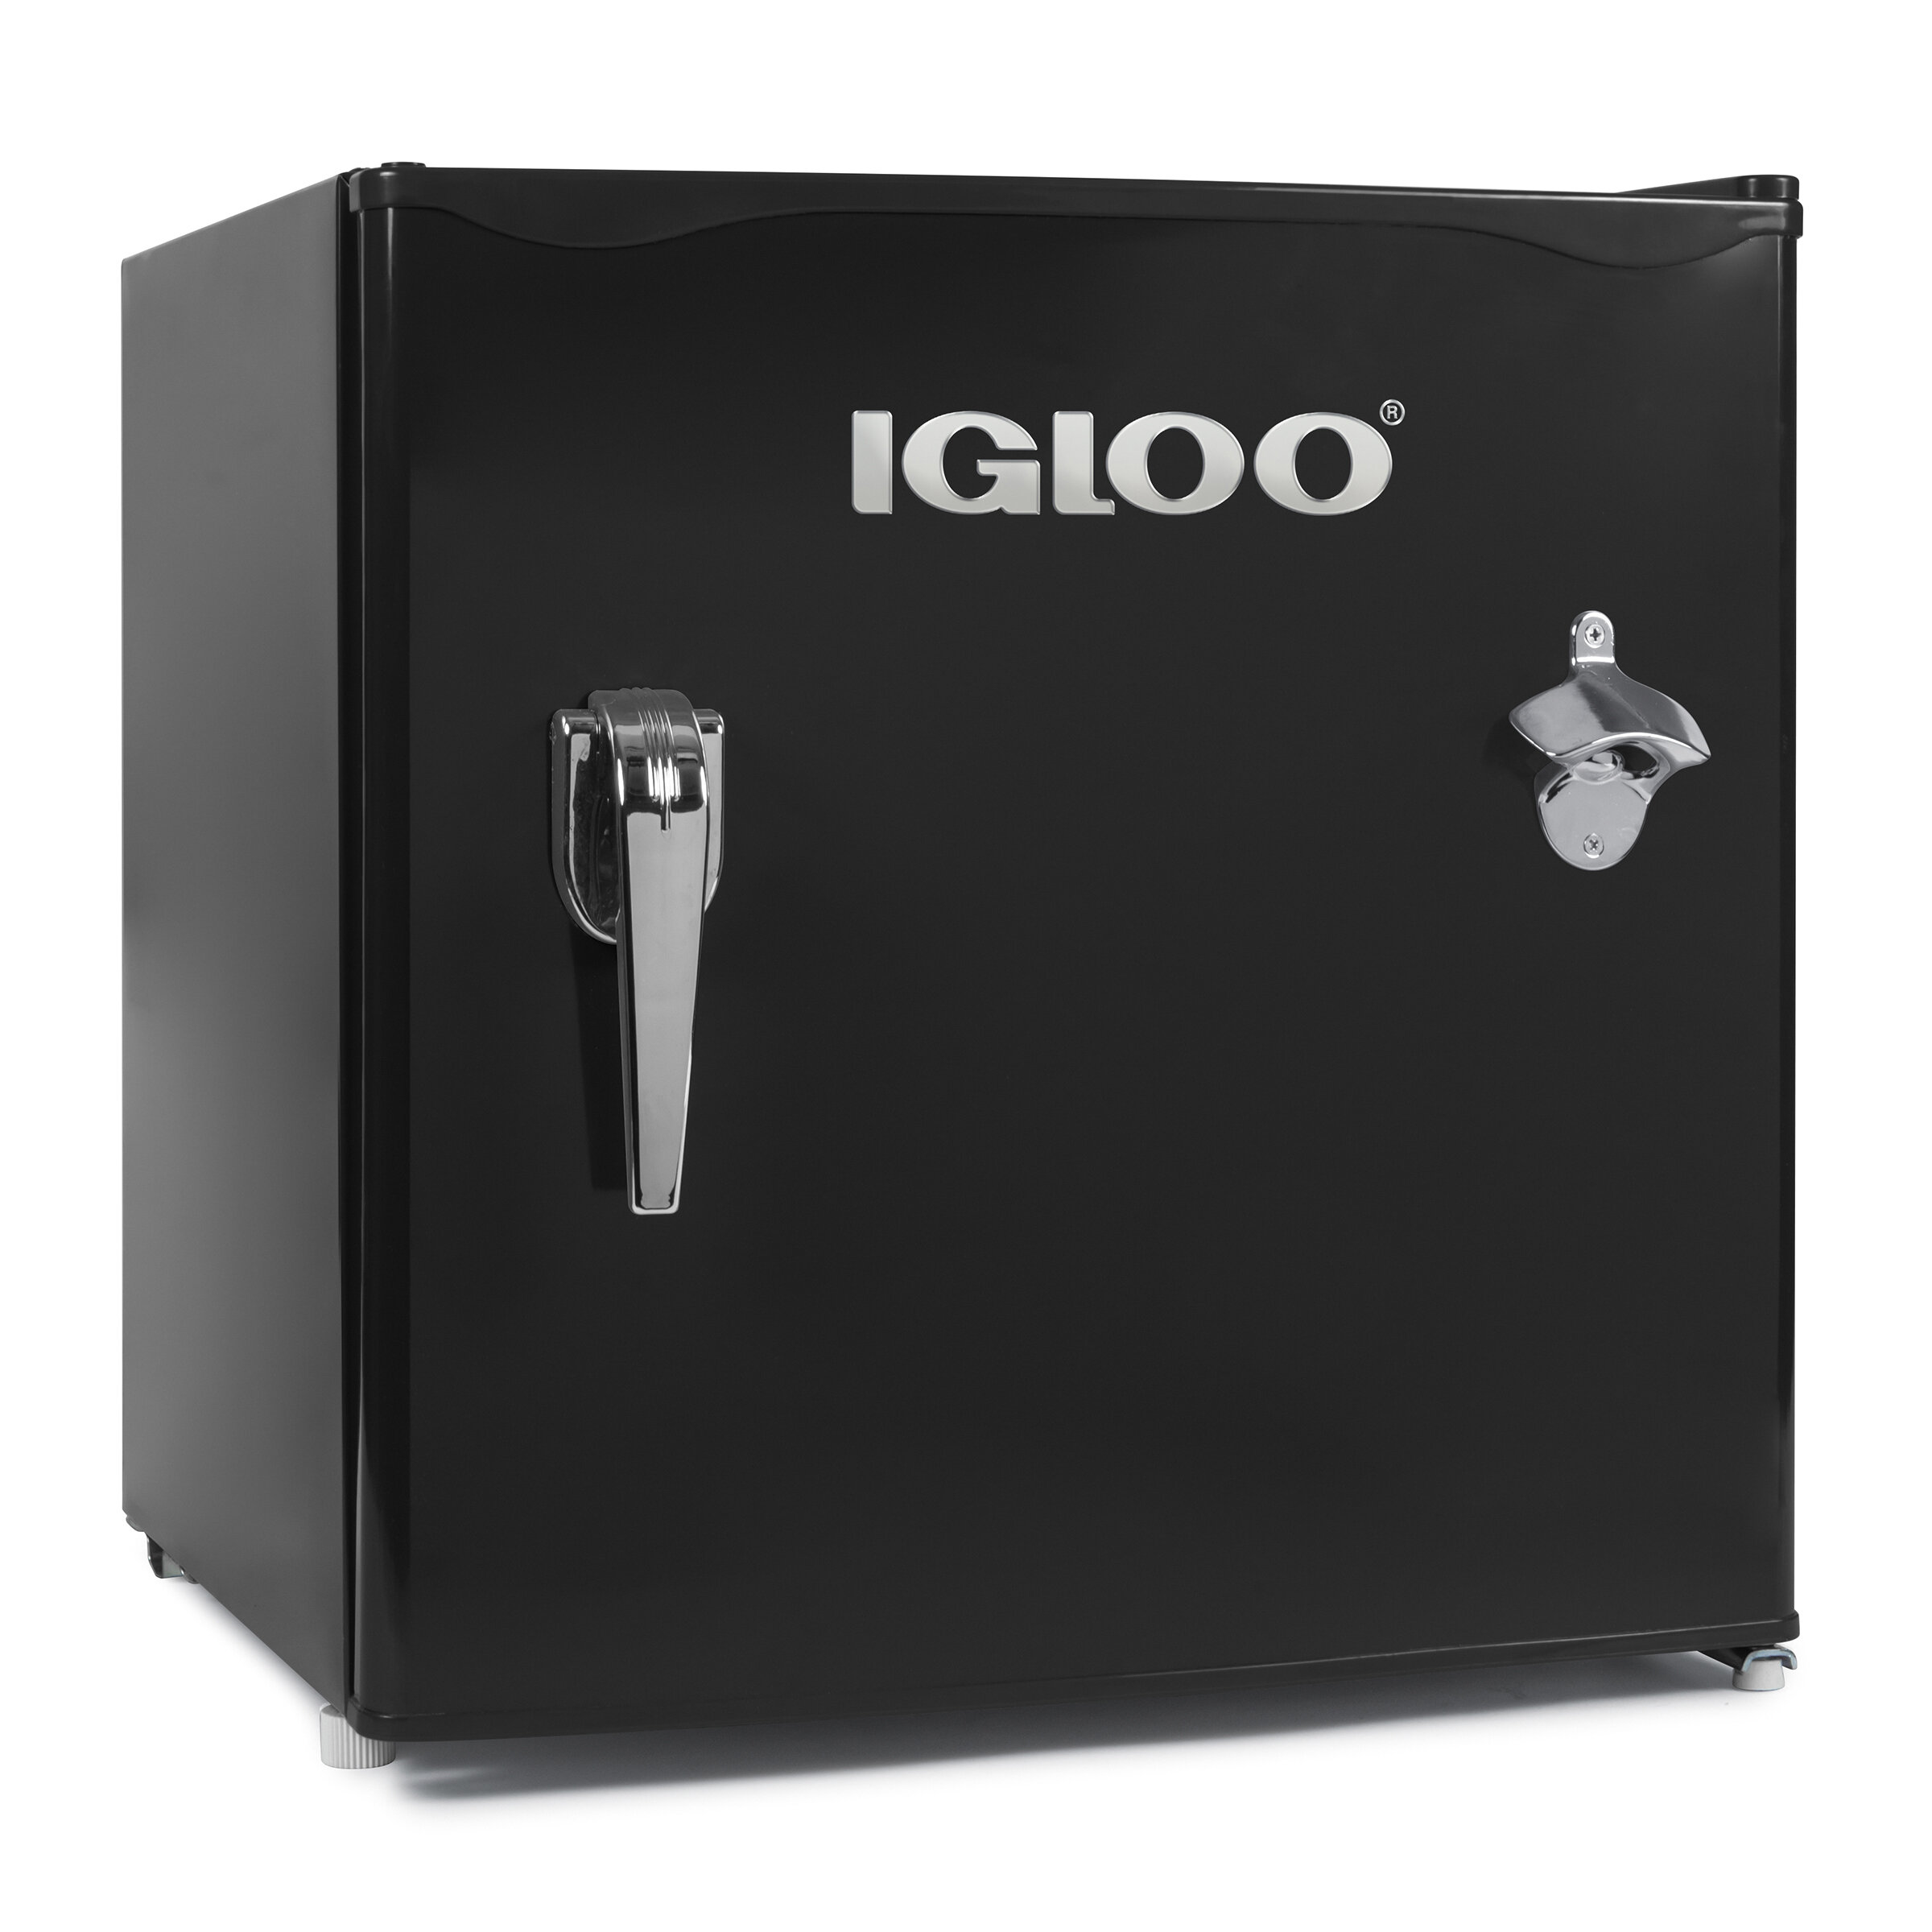 igloo mini fridge temperature control